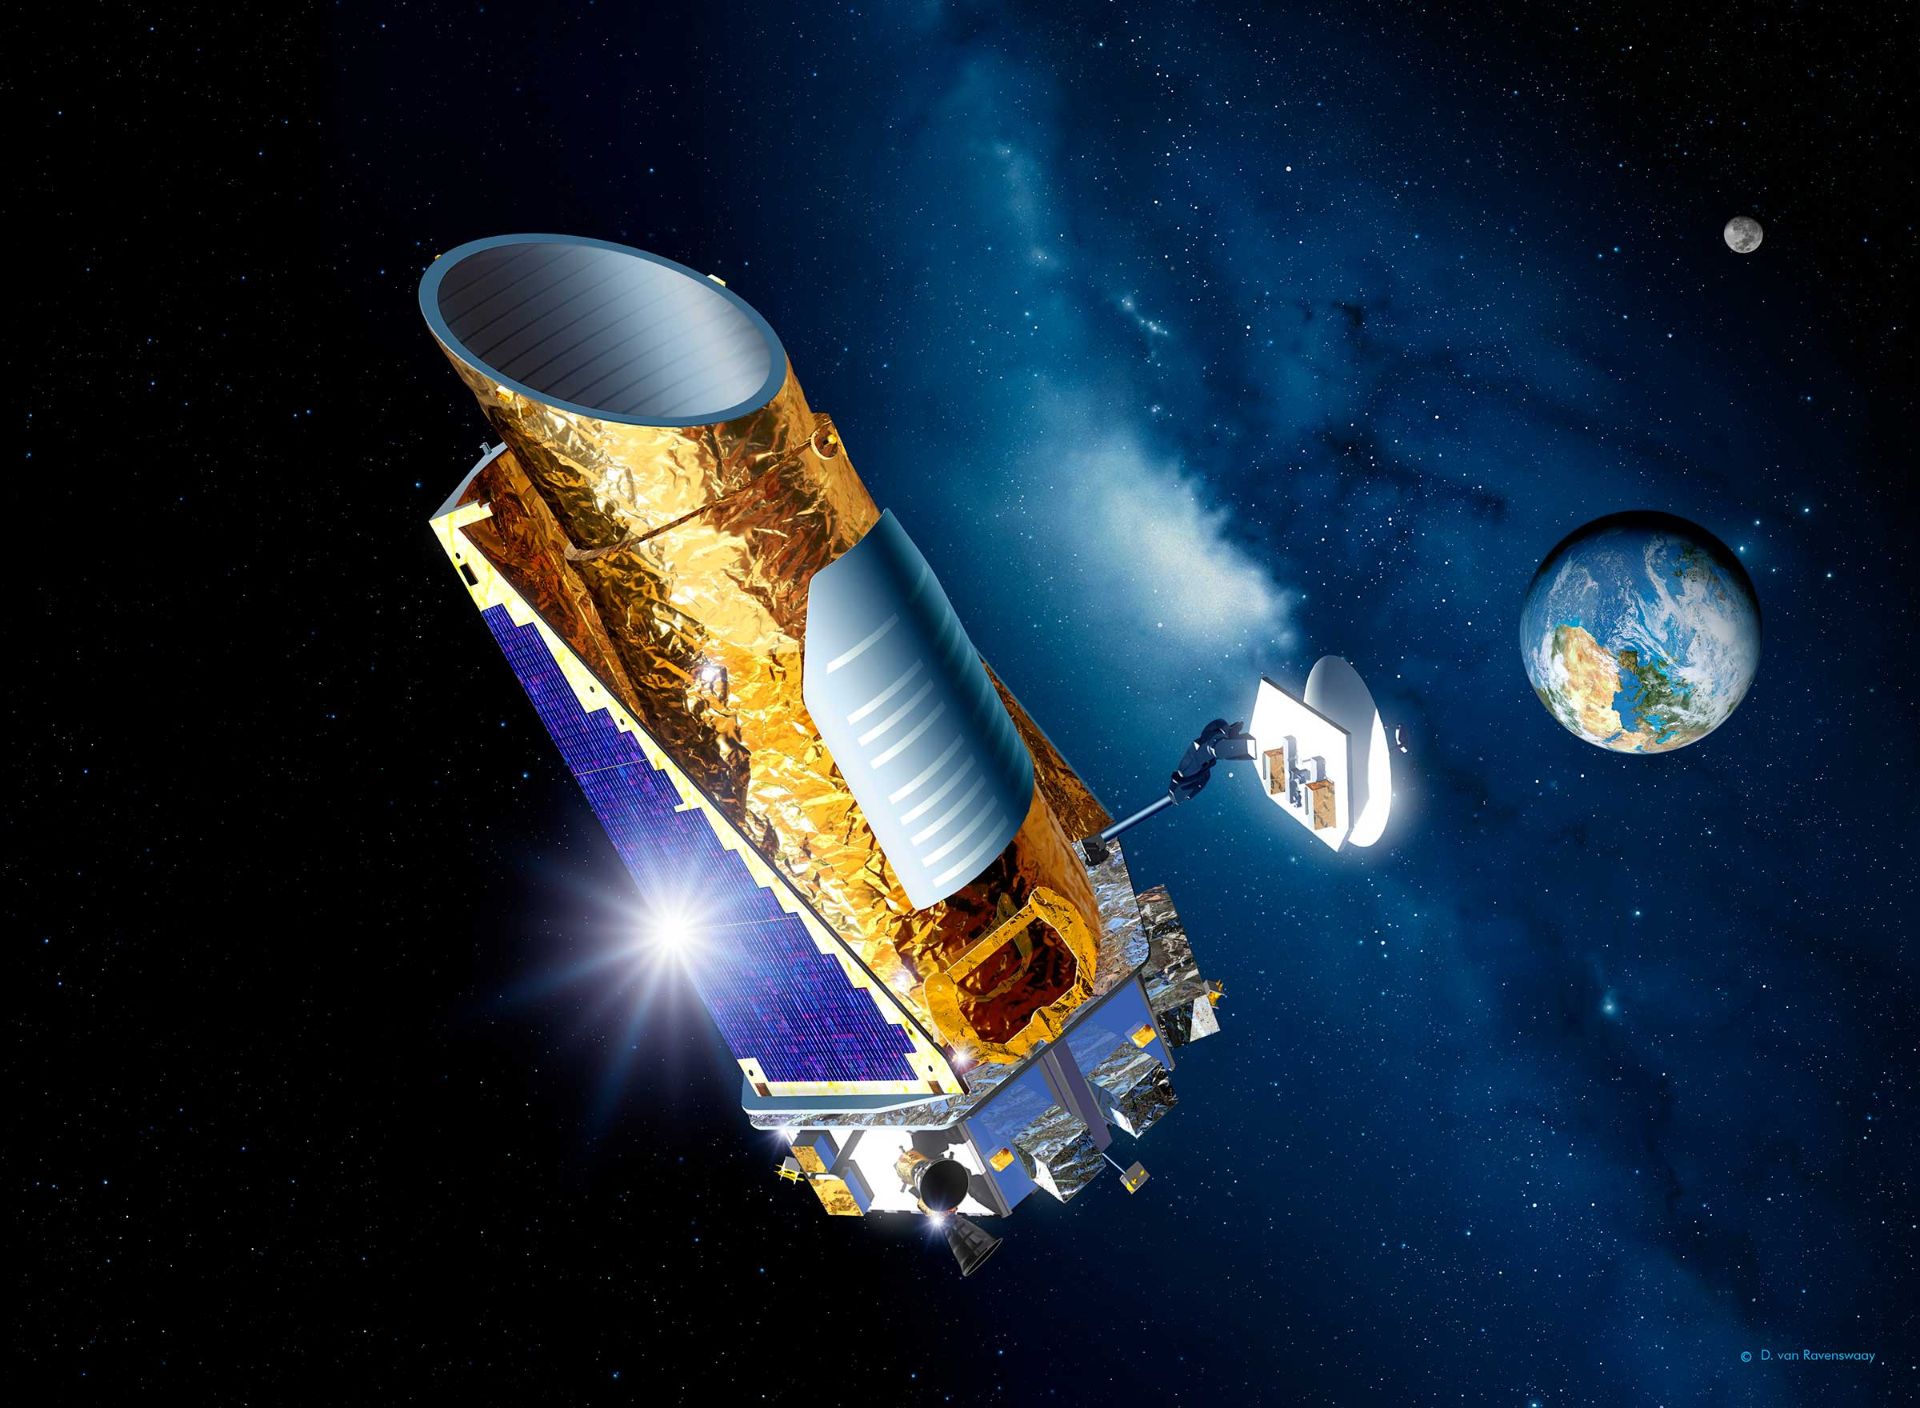 Artistic rendering of NASA's Kepler Space Telescope